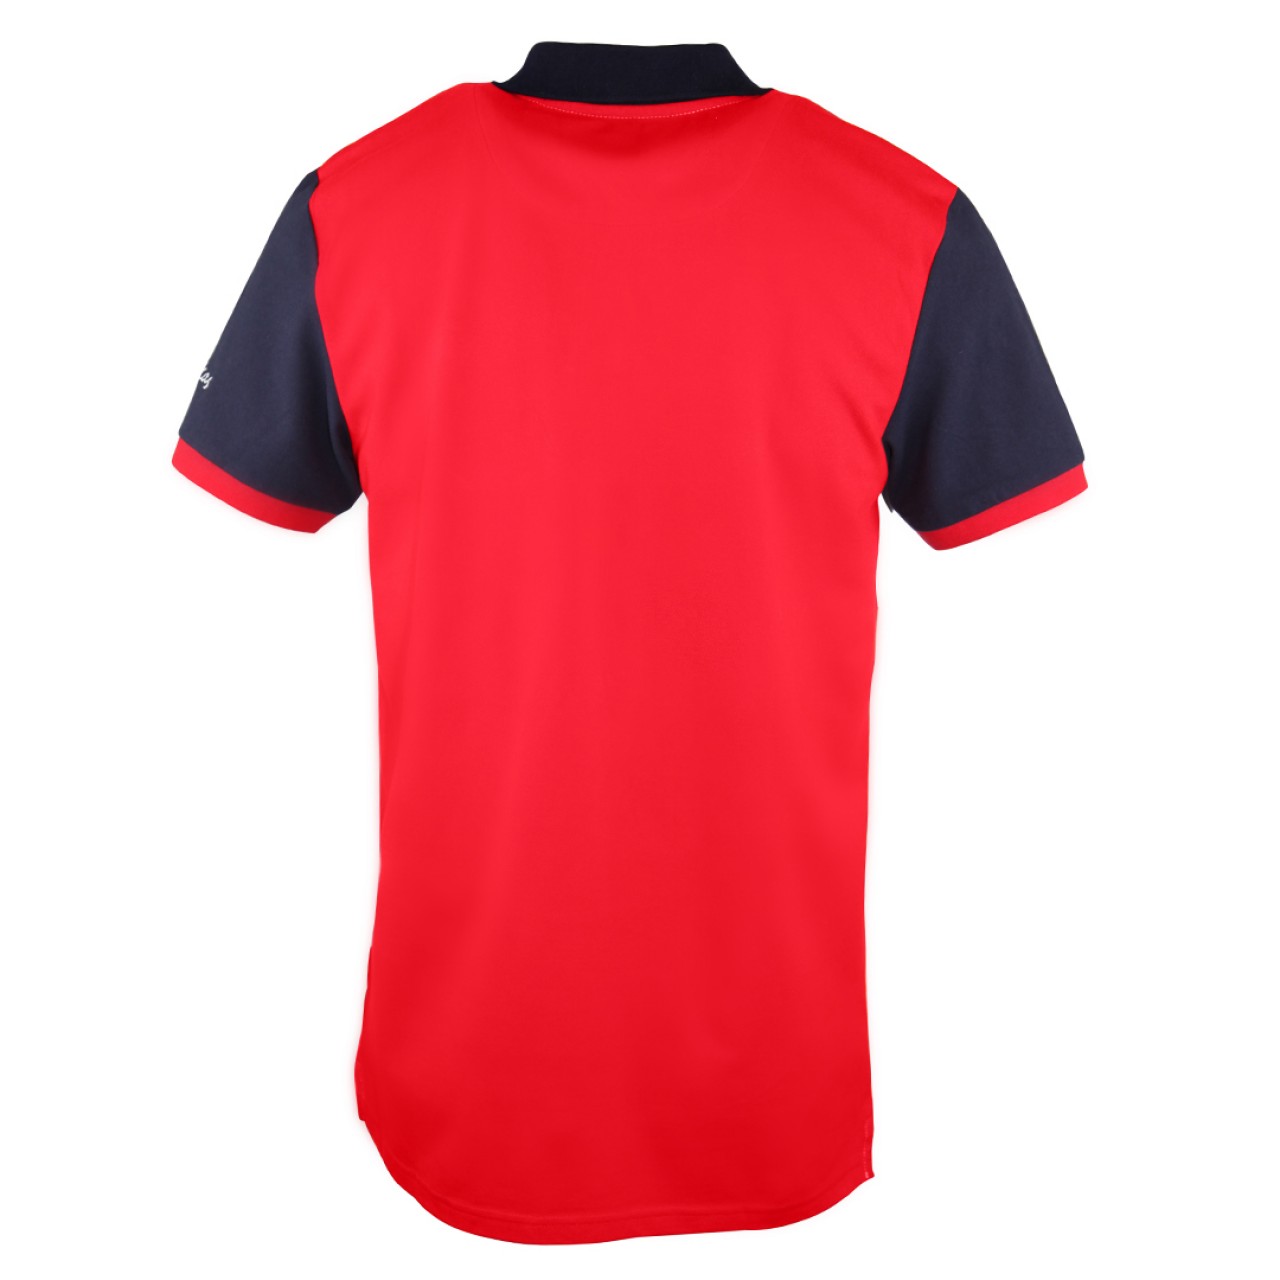 Zeekas White With Navy Blue & Red Short Sleeve Collar Polo Shirt Mens